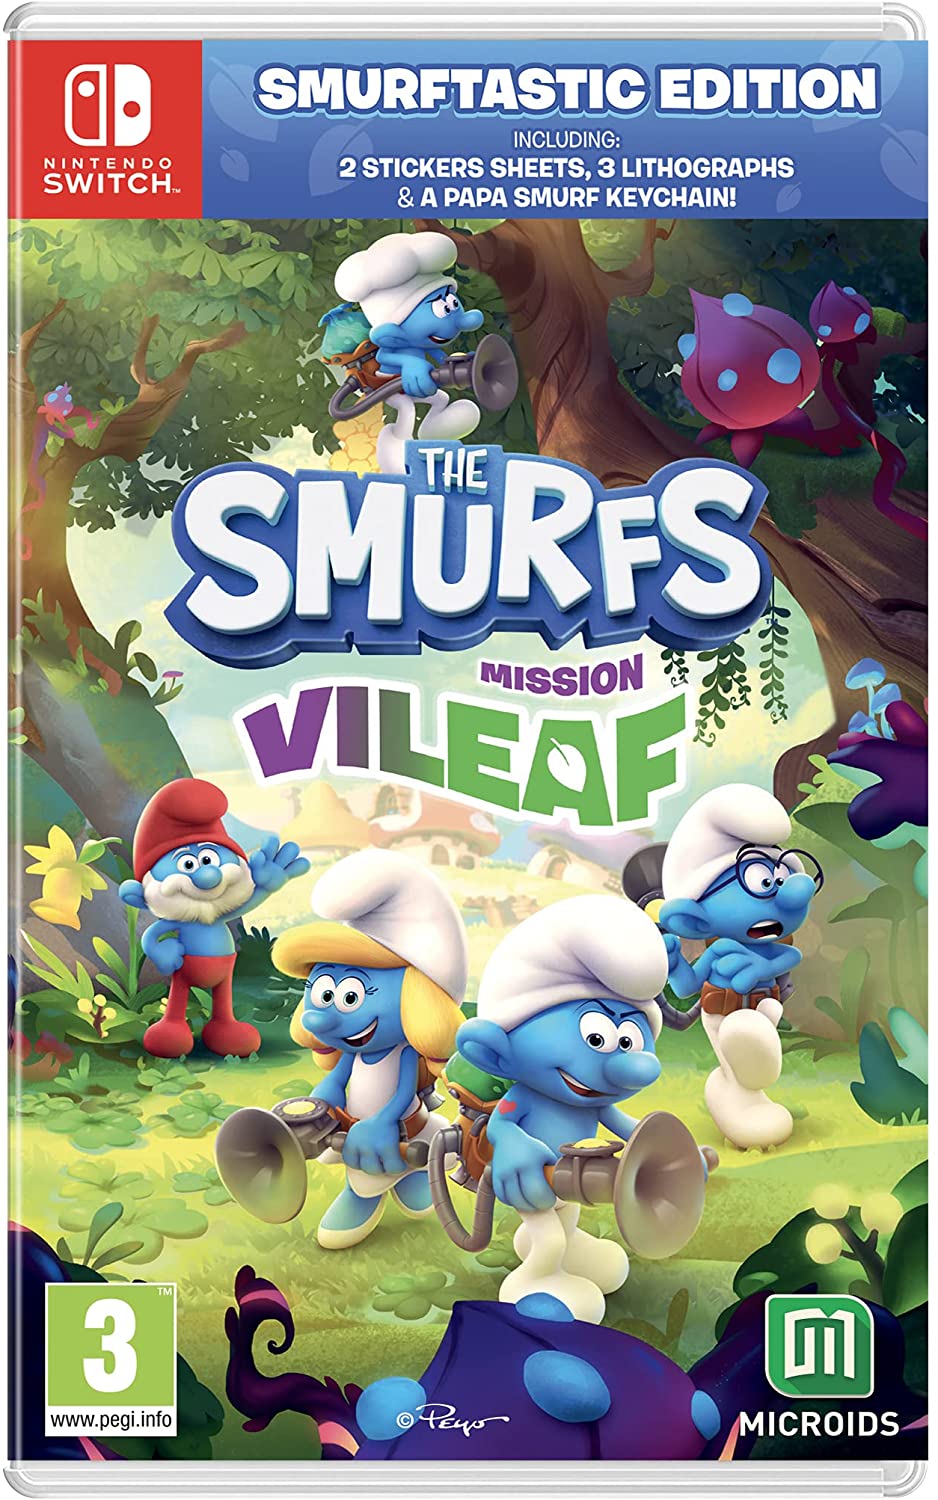 The Smurfs: Mission ViLeaf - Smurftastic Edition (Nintendo Switch)